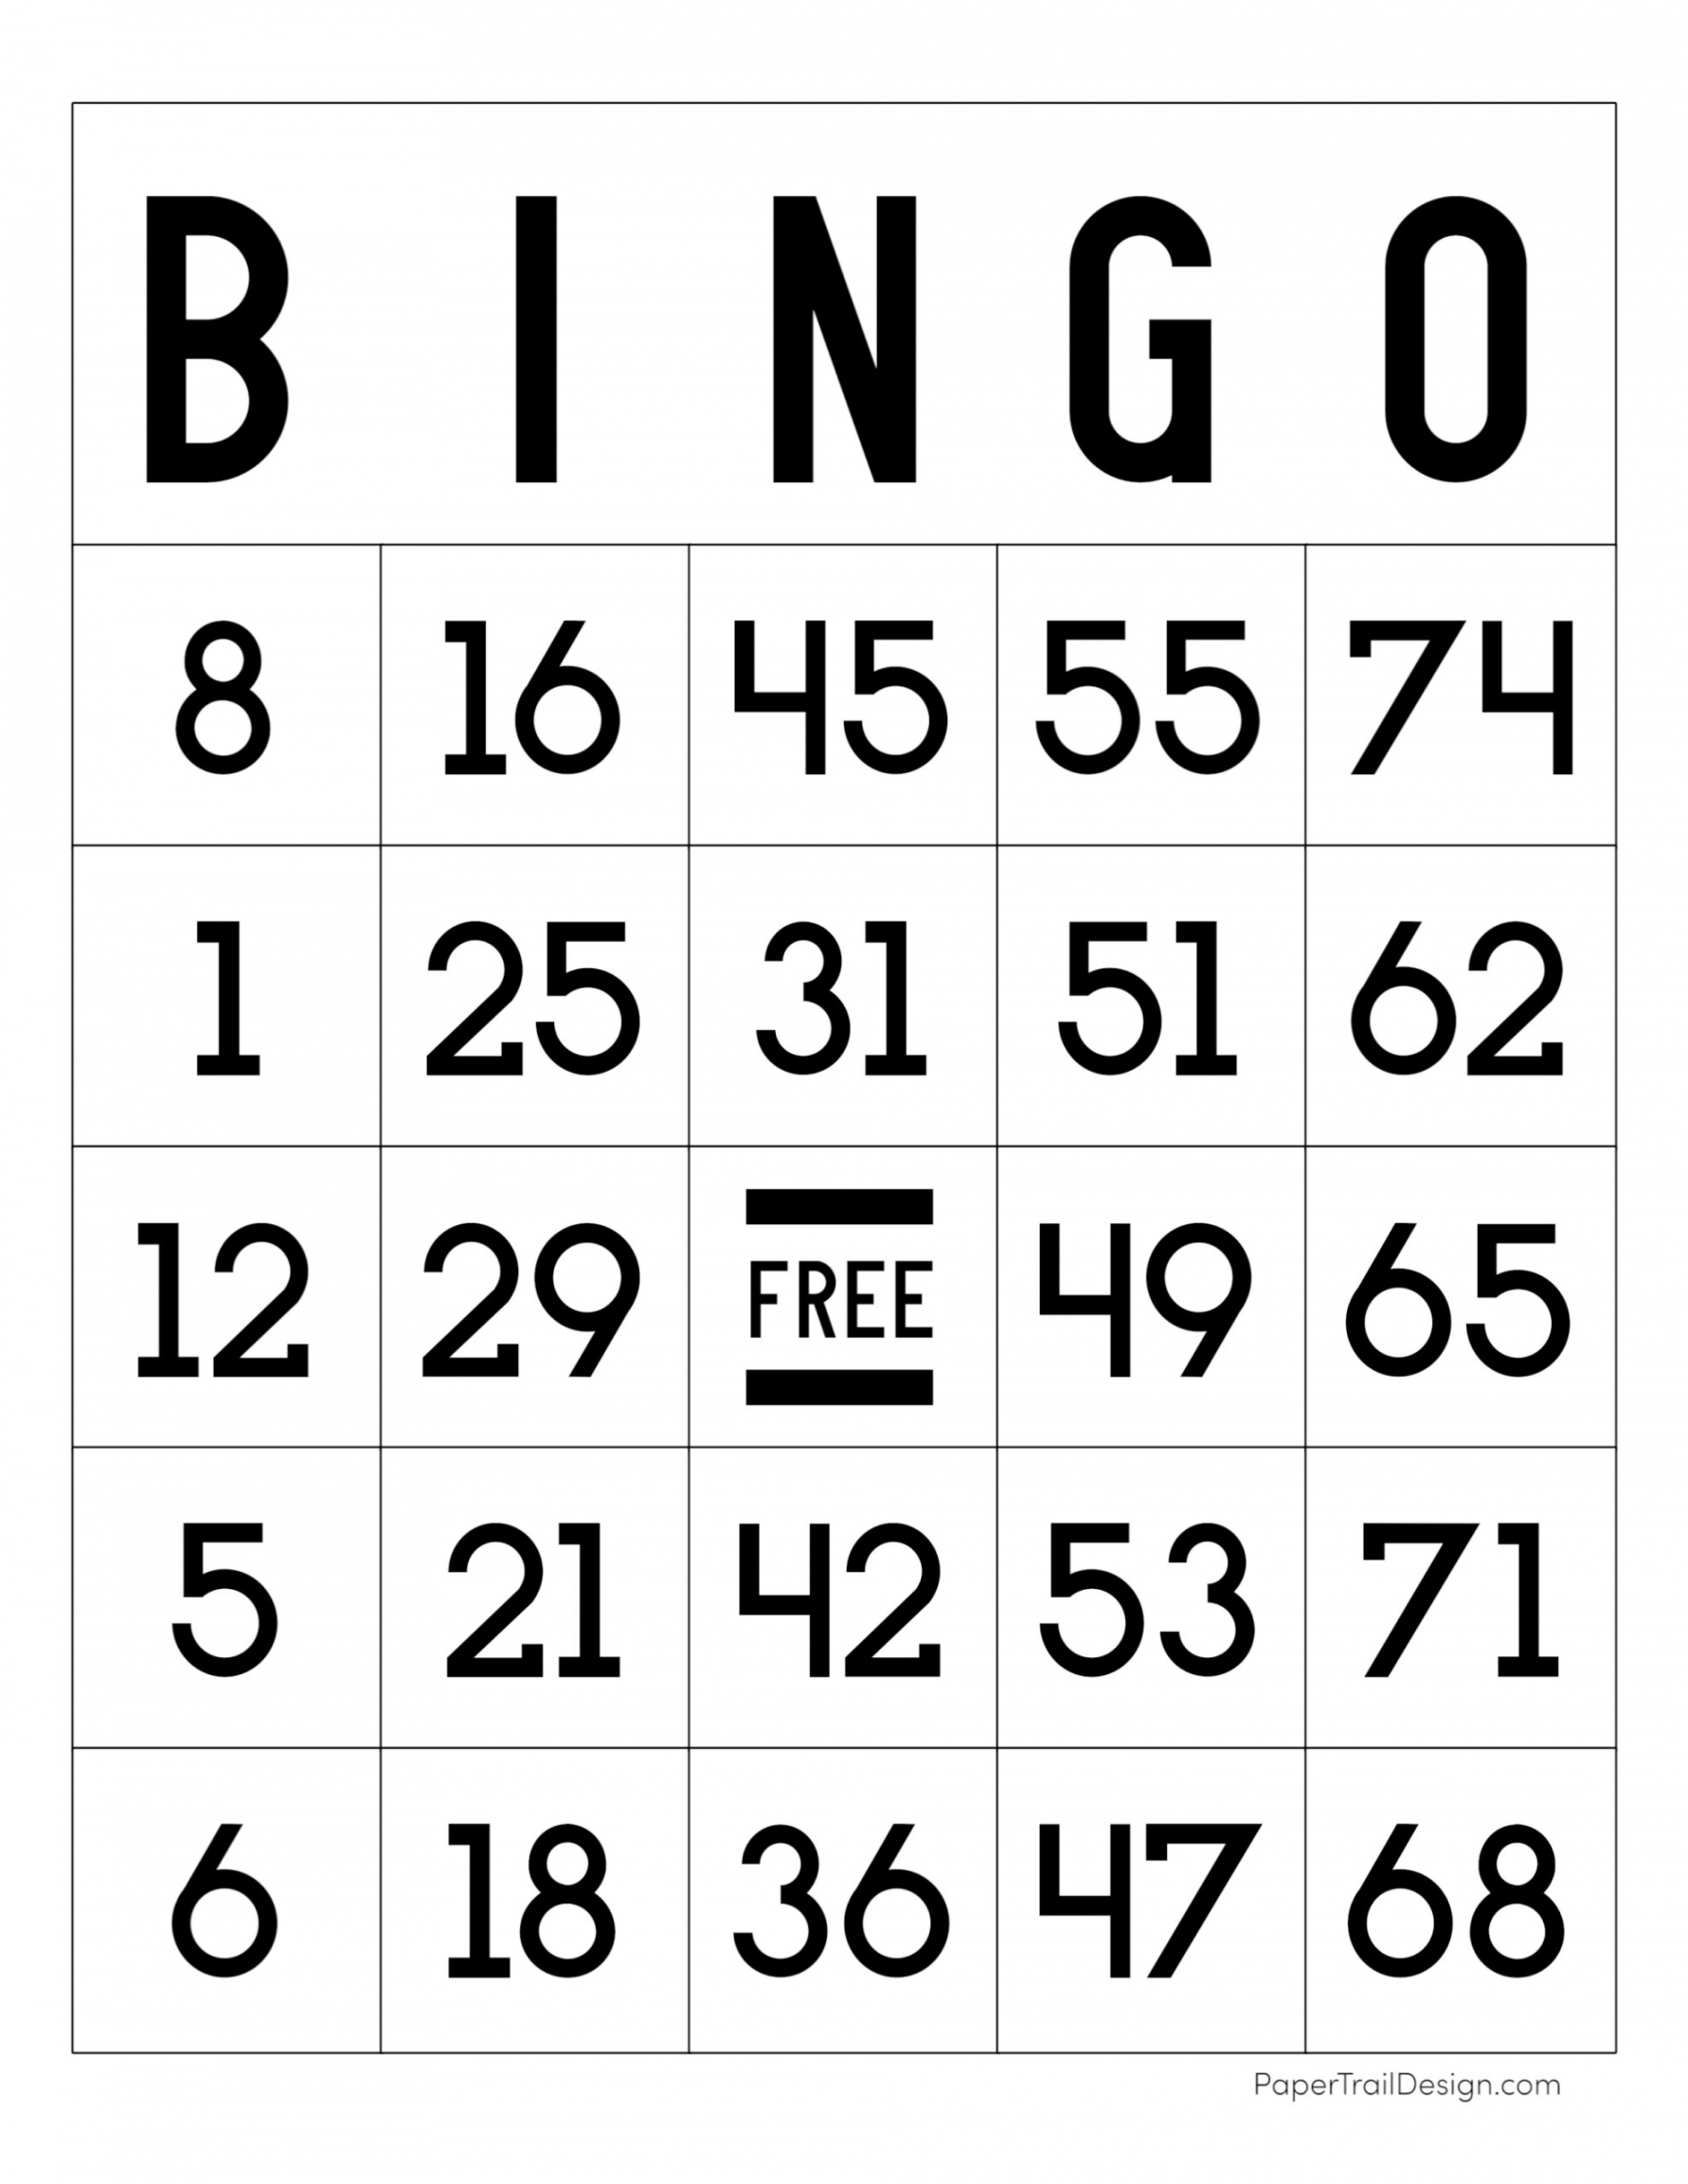 Bingo Card Free Printable - Printable - Free Printable Bingo Cards - Paper Trail Design